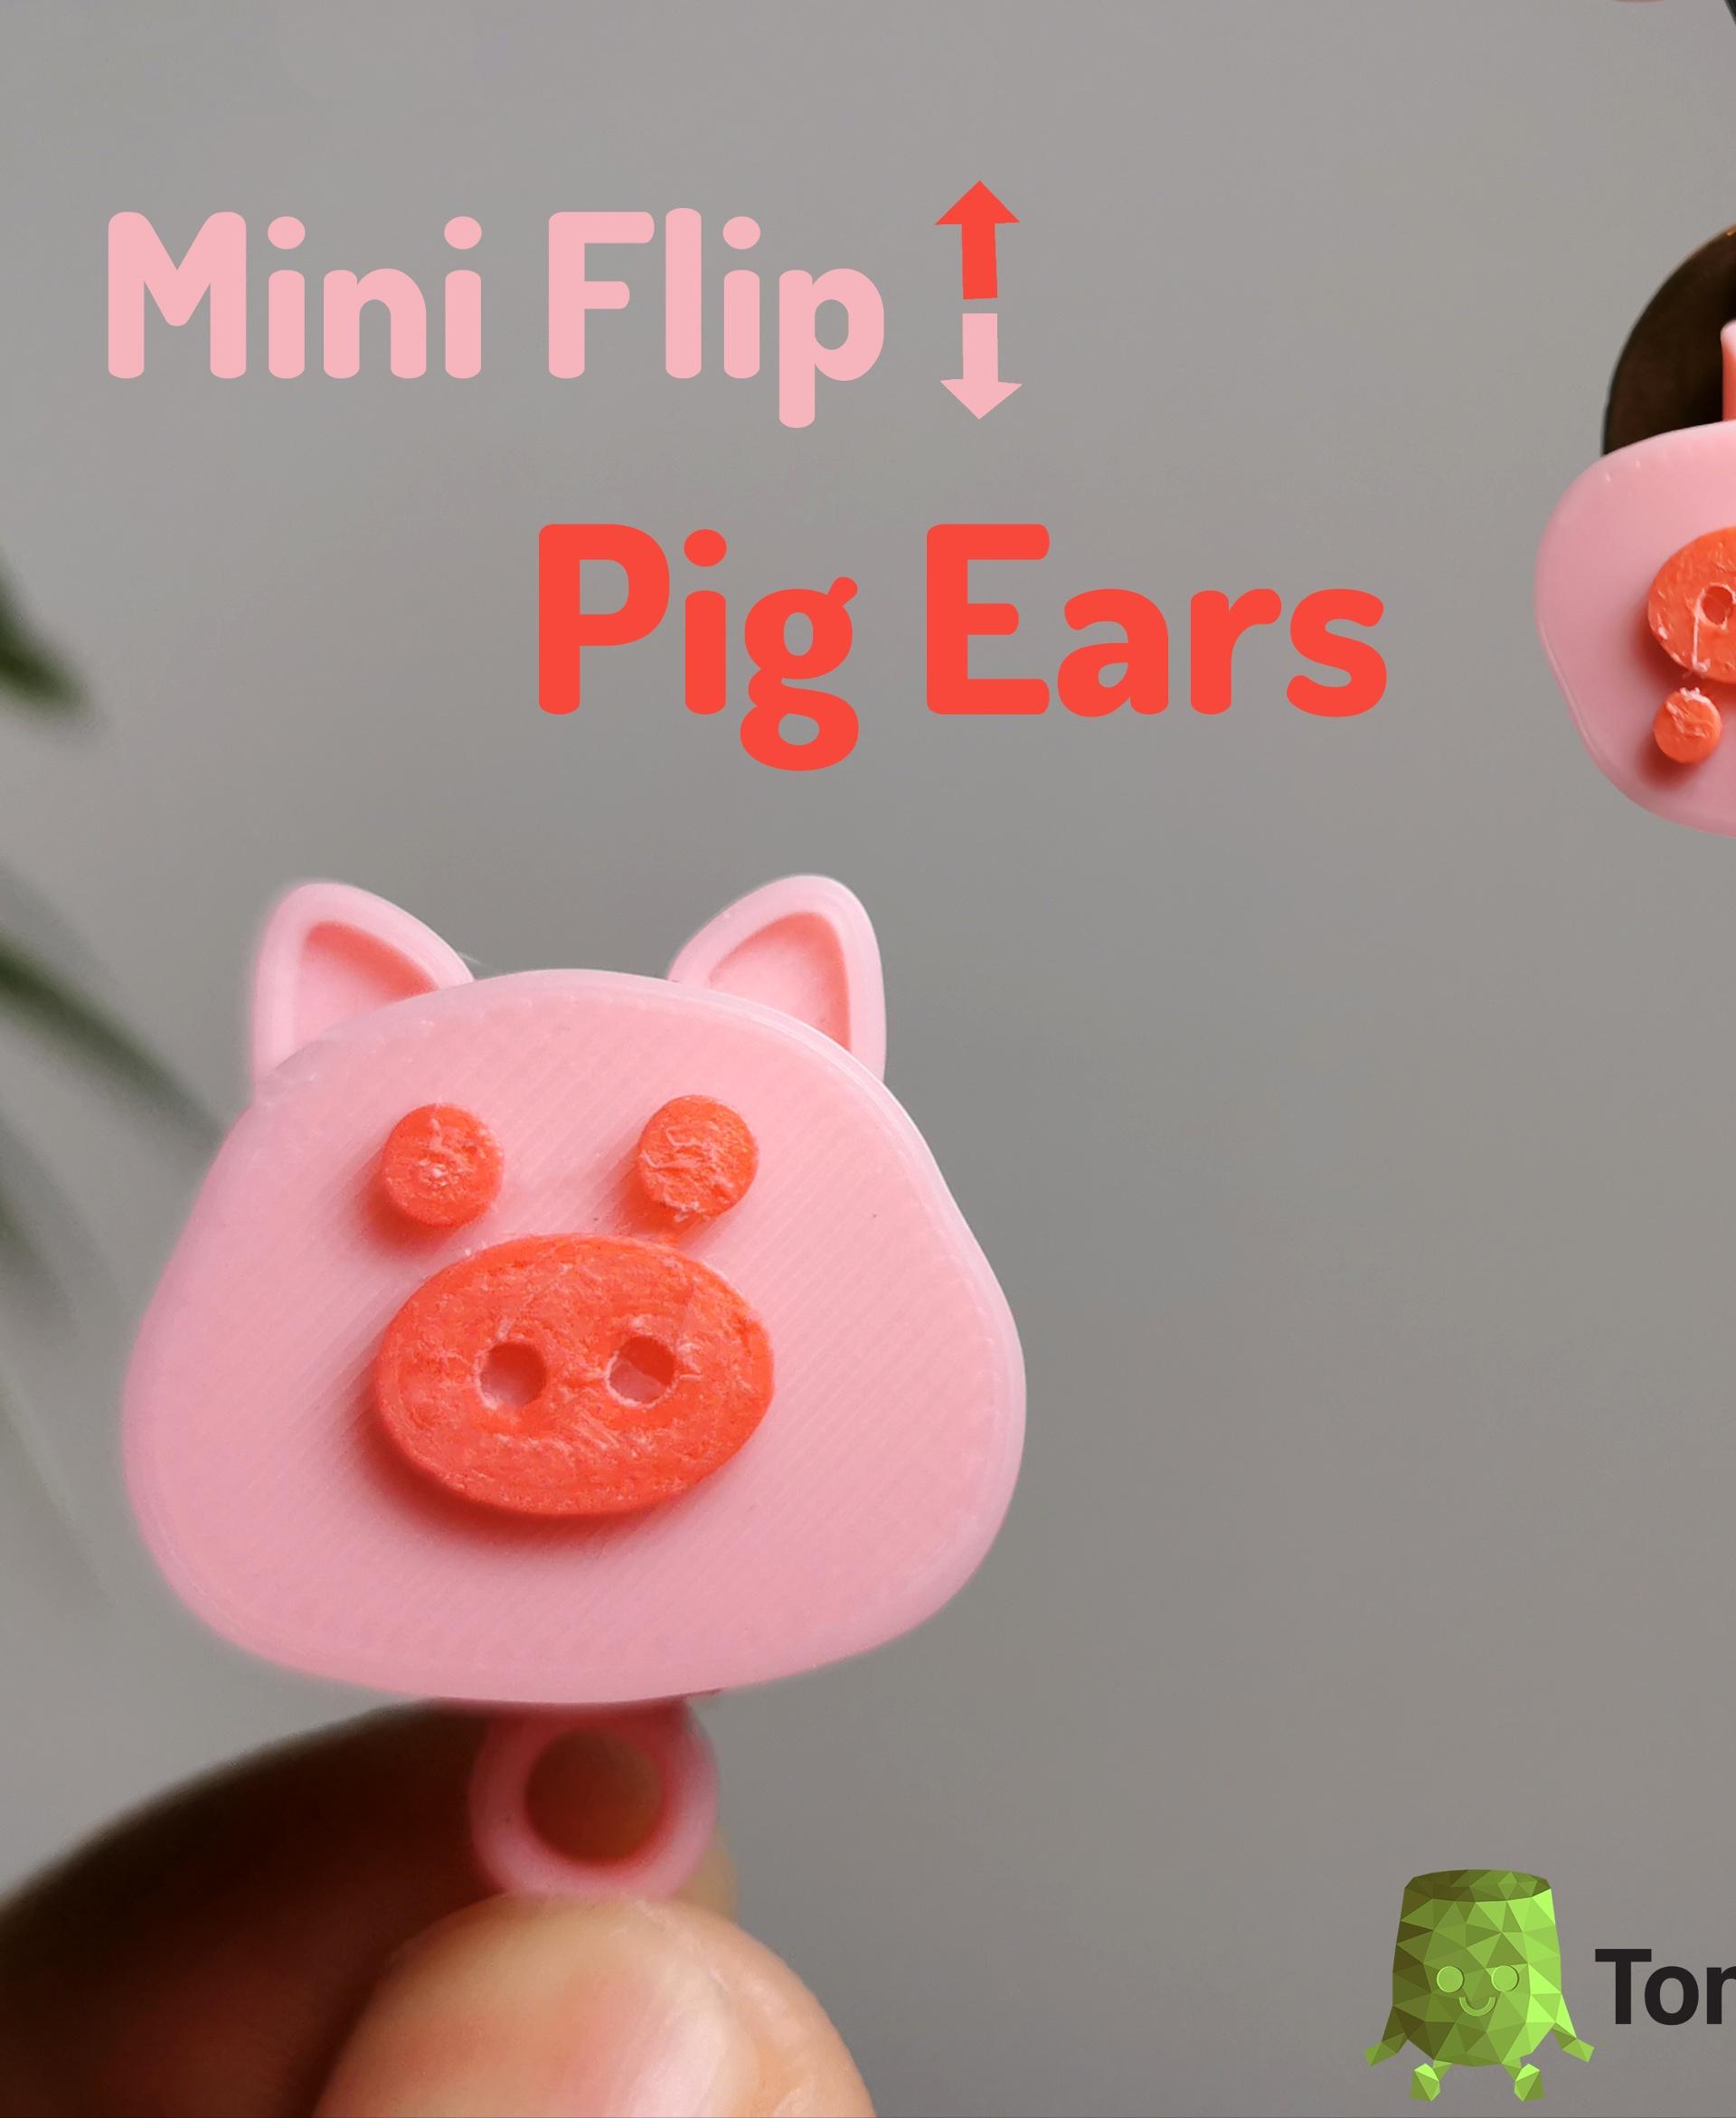 Mini Flip Pig Ears Happy - The ears flip up and down - 3d model